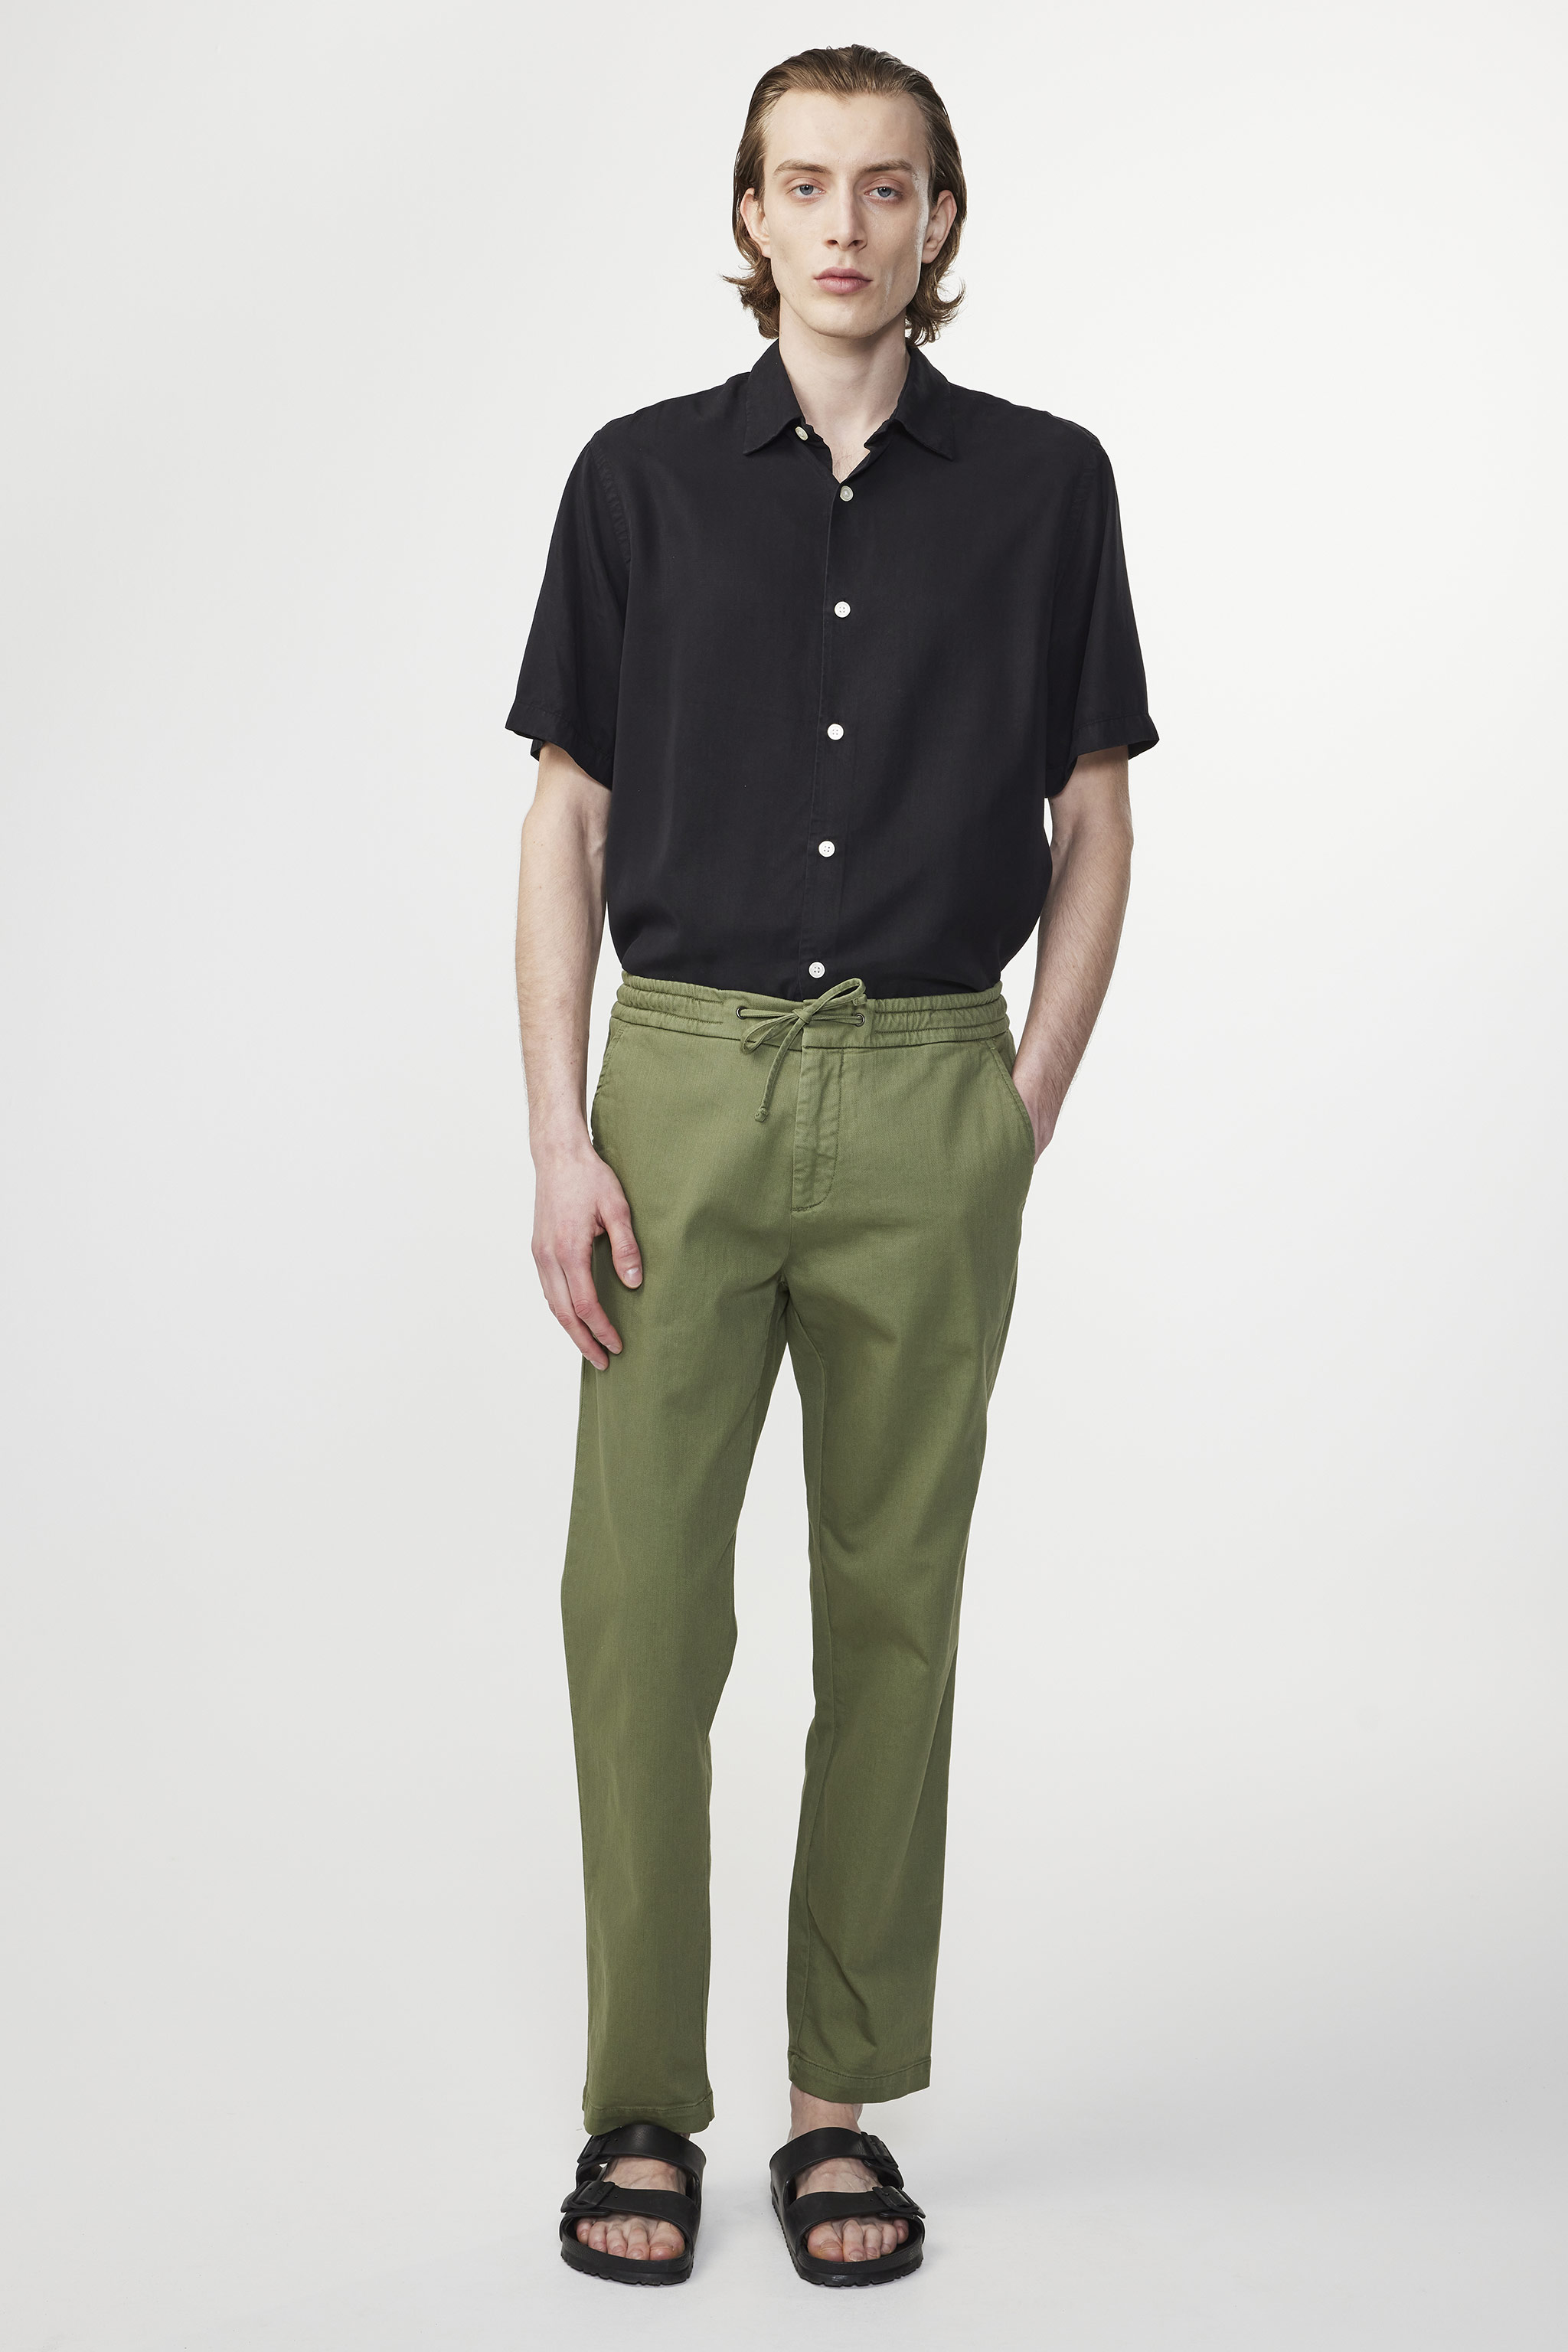 Buy 4 Way Stretch High waist trousers- Forest Green Online | Urban Poche